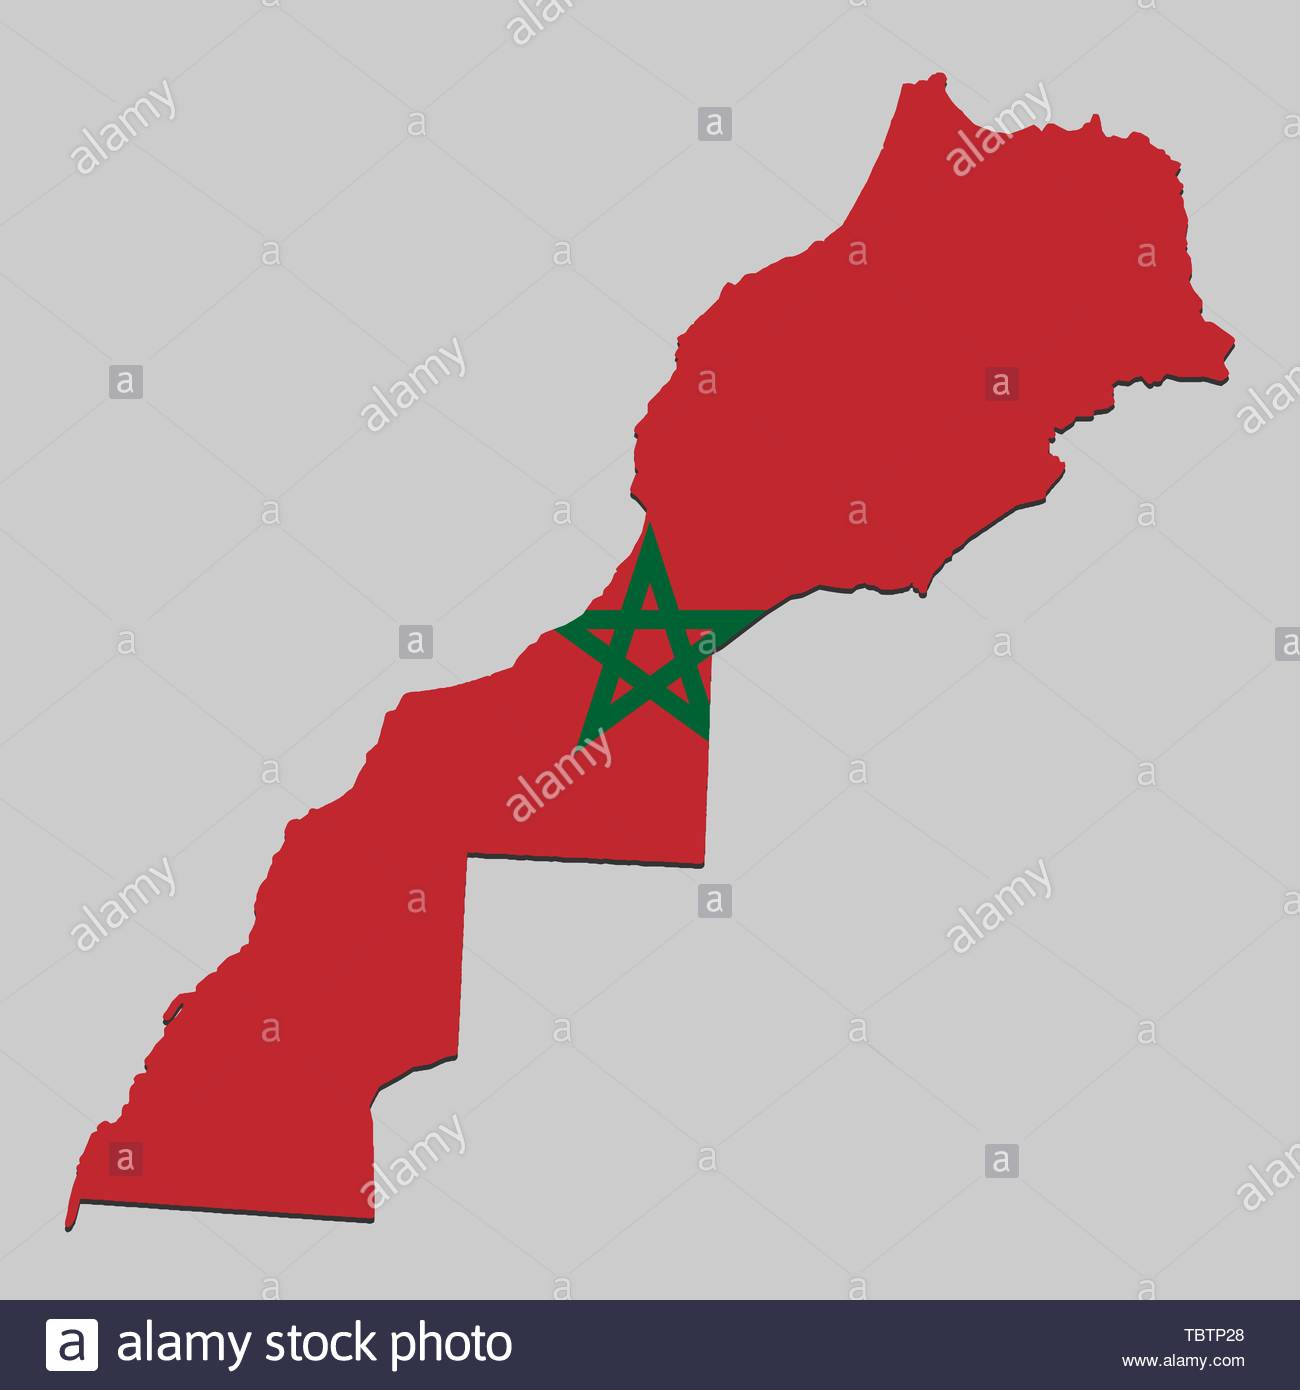 carte-du-maroc-avec-drapeau-national-vector-illustration-tbtp28.jpg